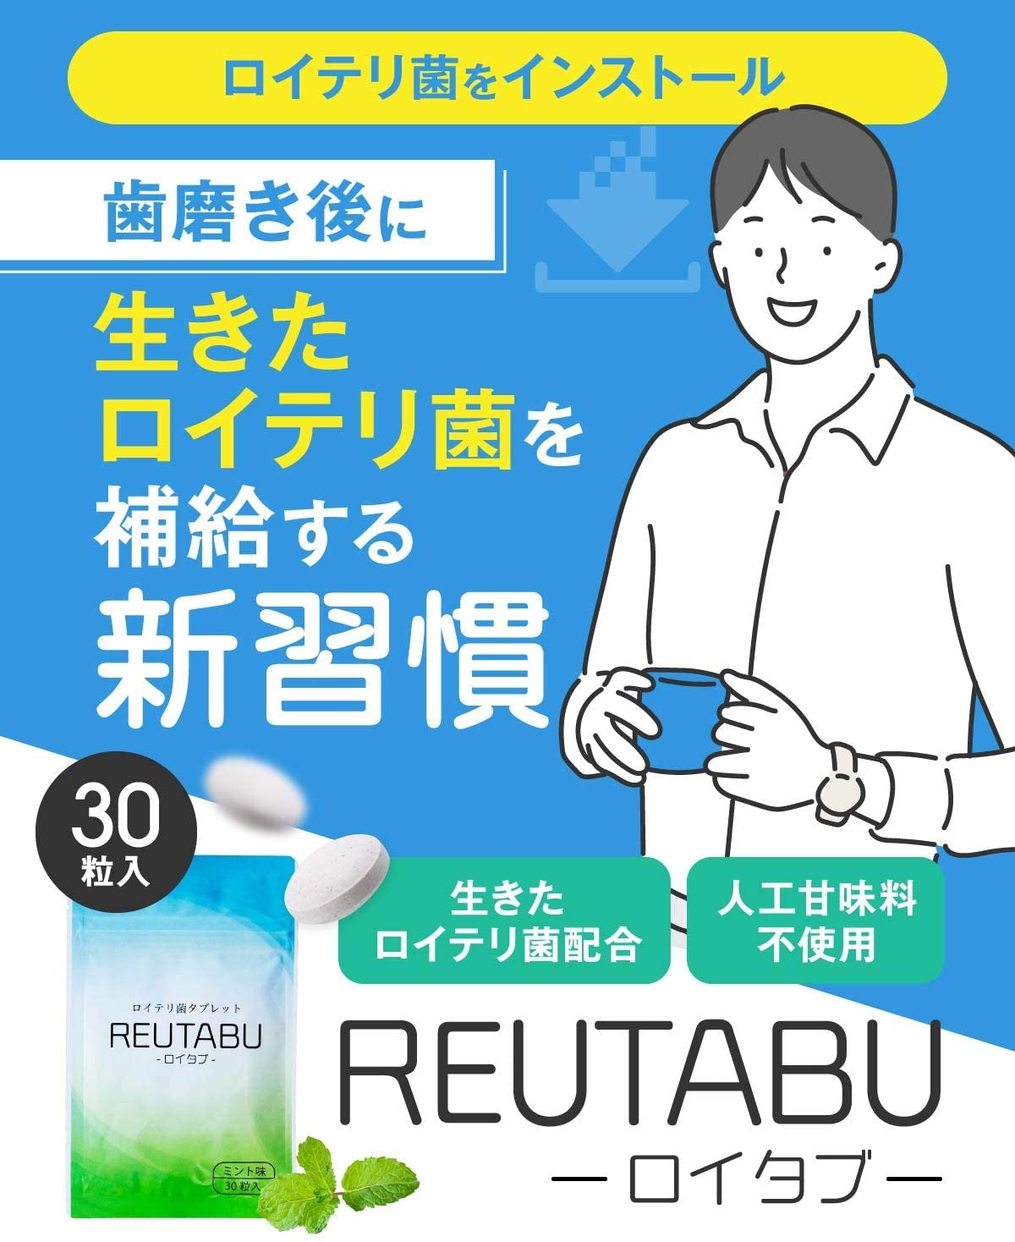 REUTABU(ロイタブ) ロイテリ菌タブレットの商品画像2 